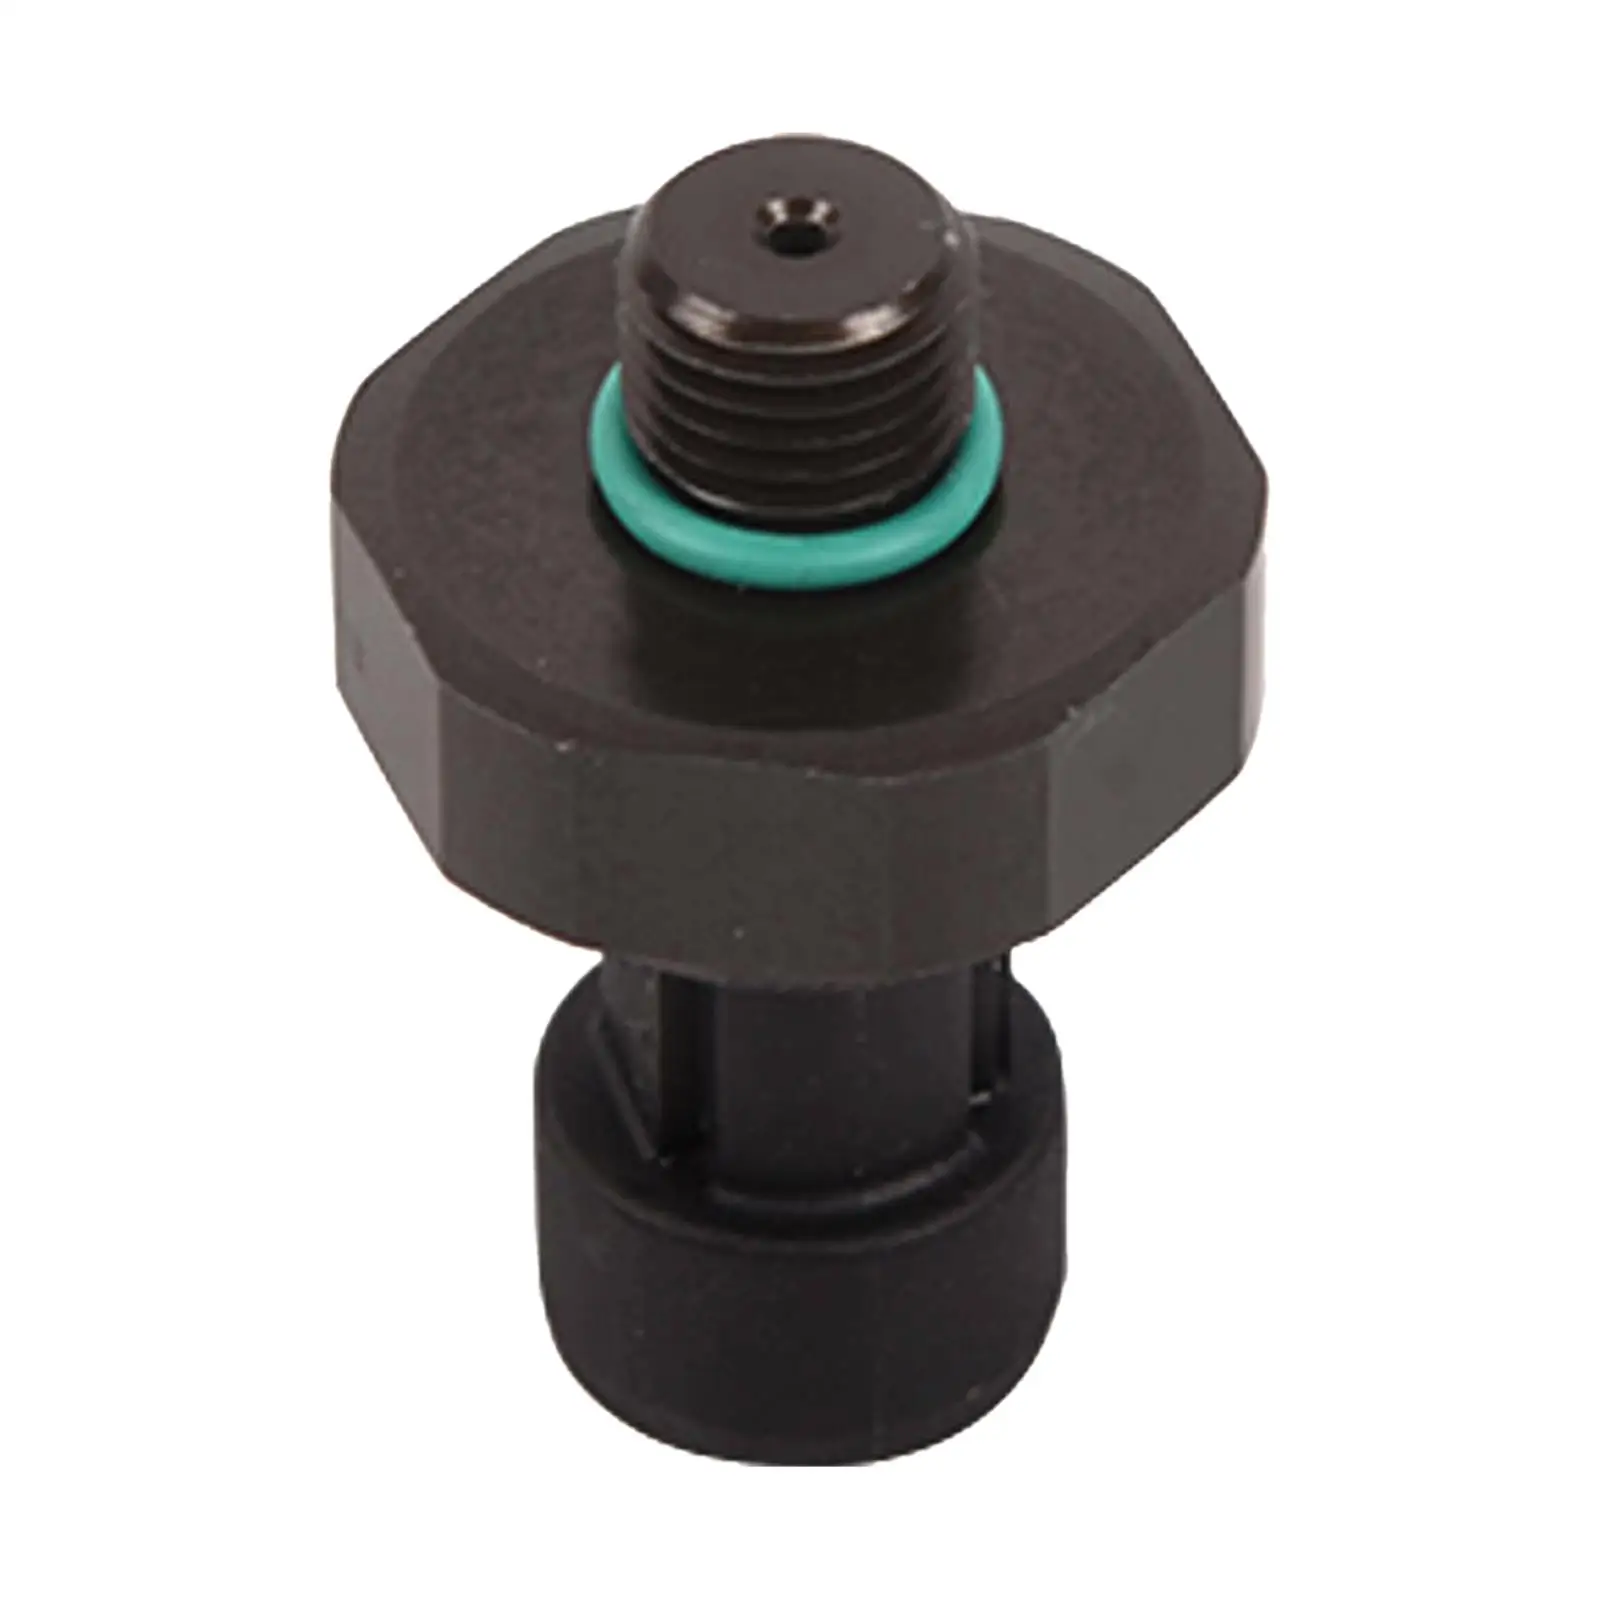 Oil Pressure Sensor Automobile Pressure Sensor for Bobcat Loader Skid Steer T650 T630 S450 T320 T870 T770 Easily Install